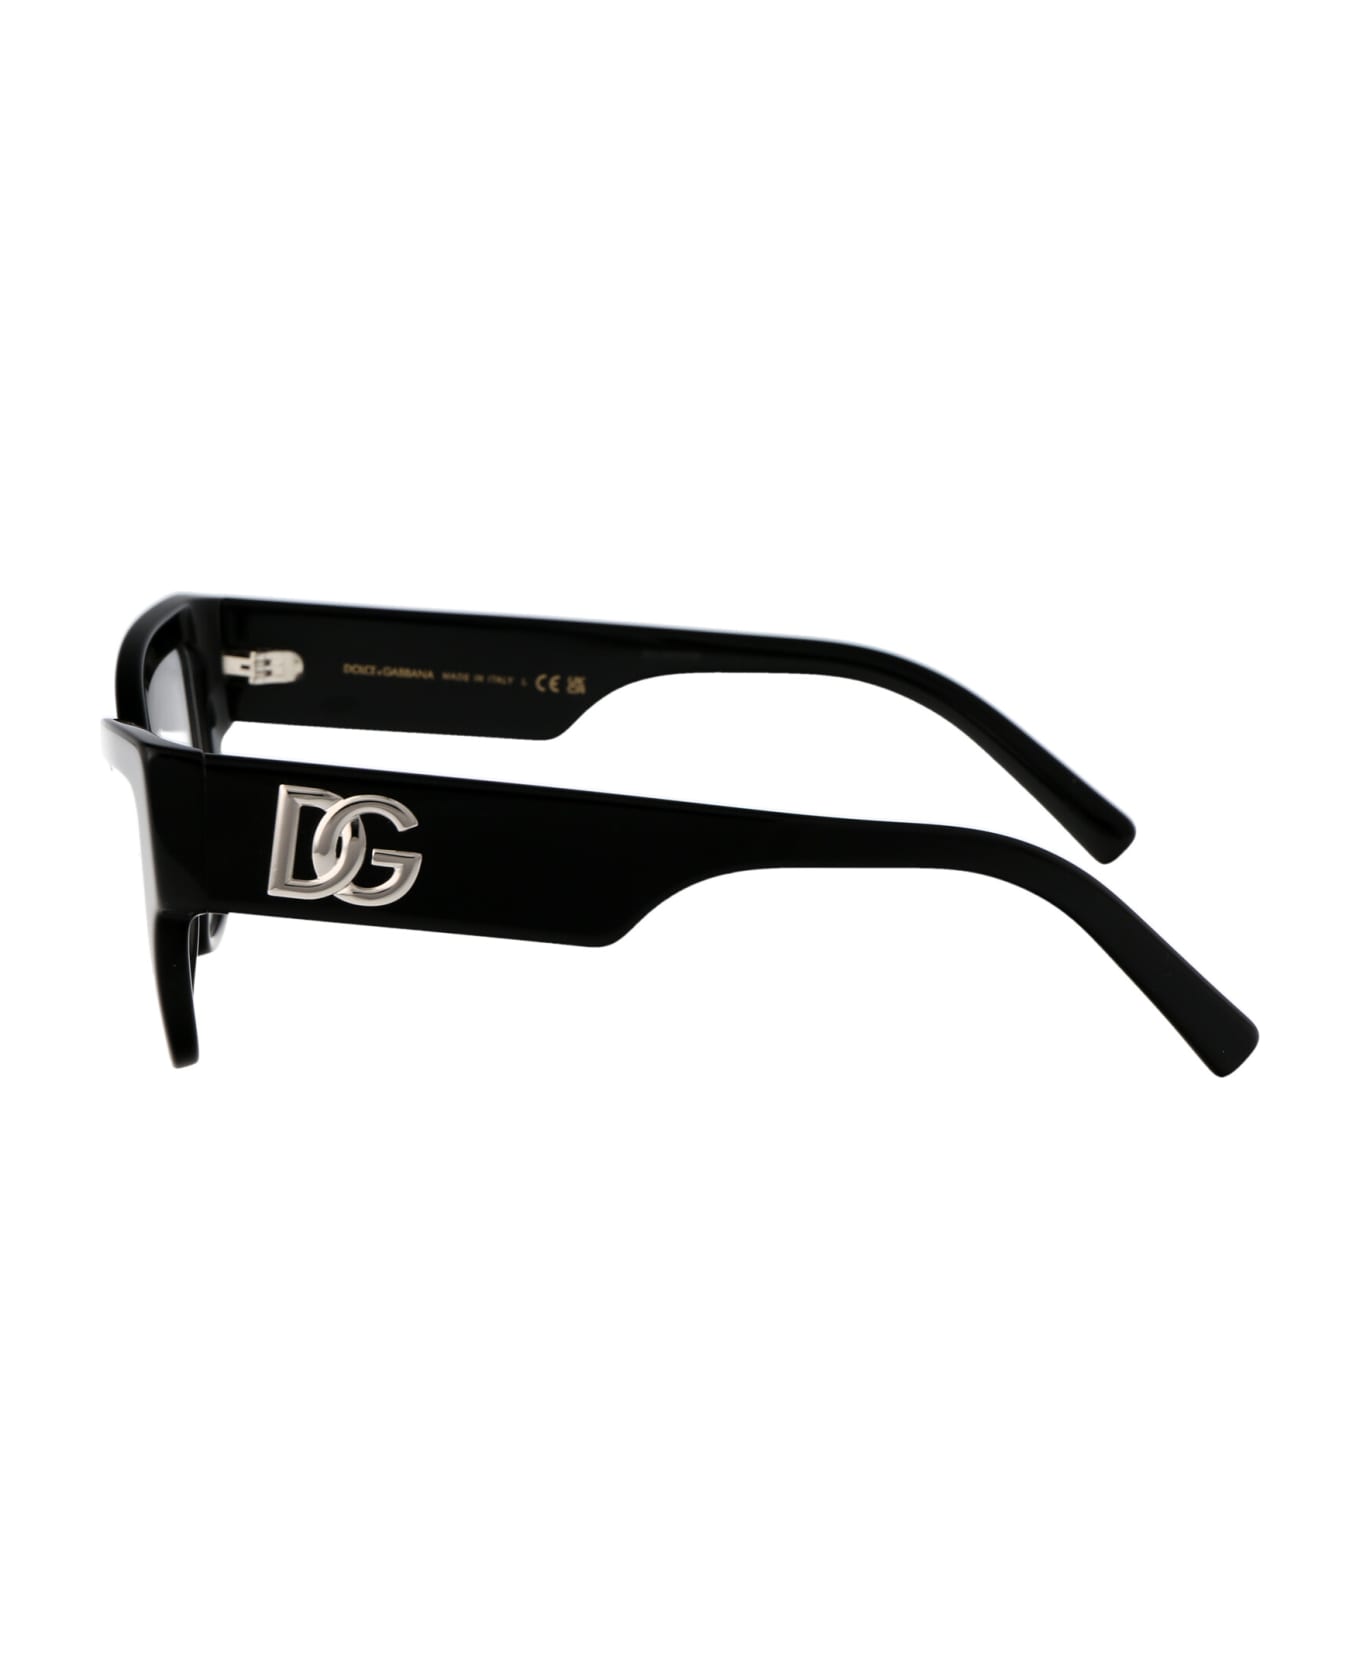 Dolce & Gabbana Eyewear 0dg3378 Glasses - 501 BLACK